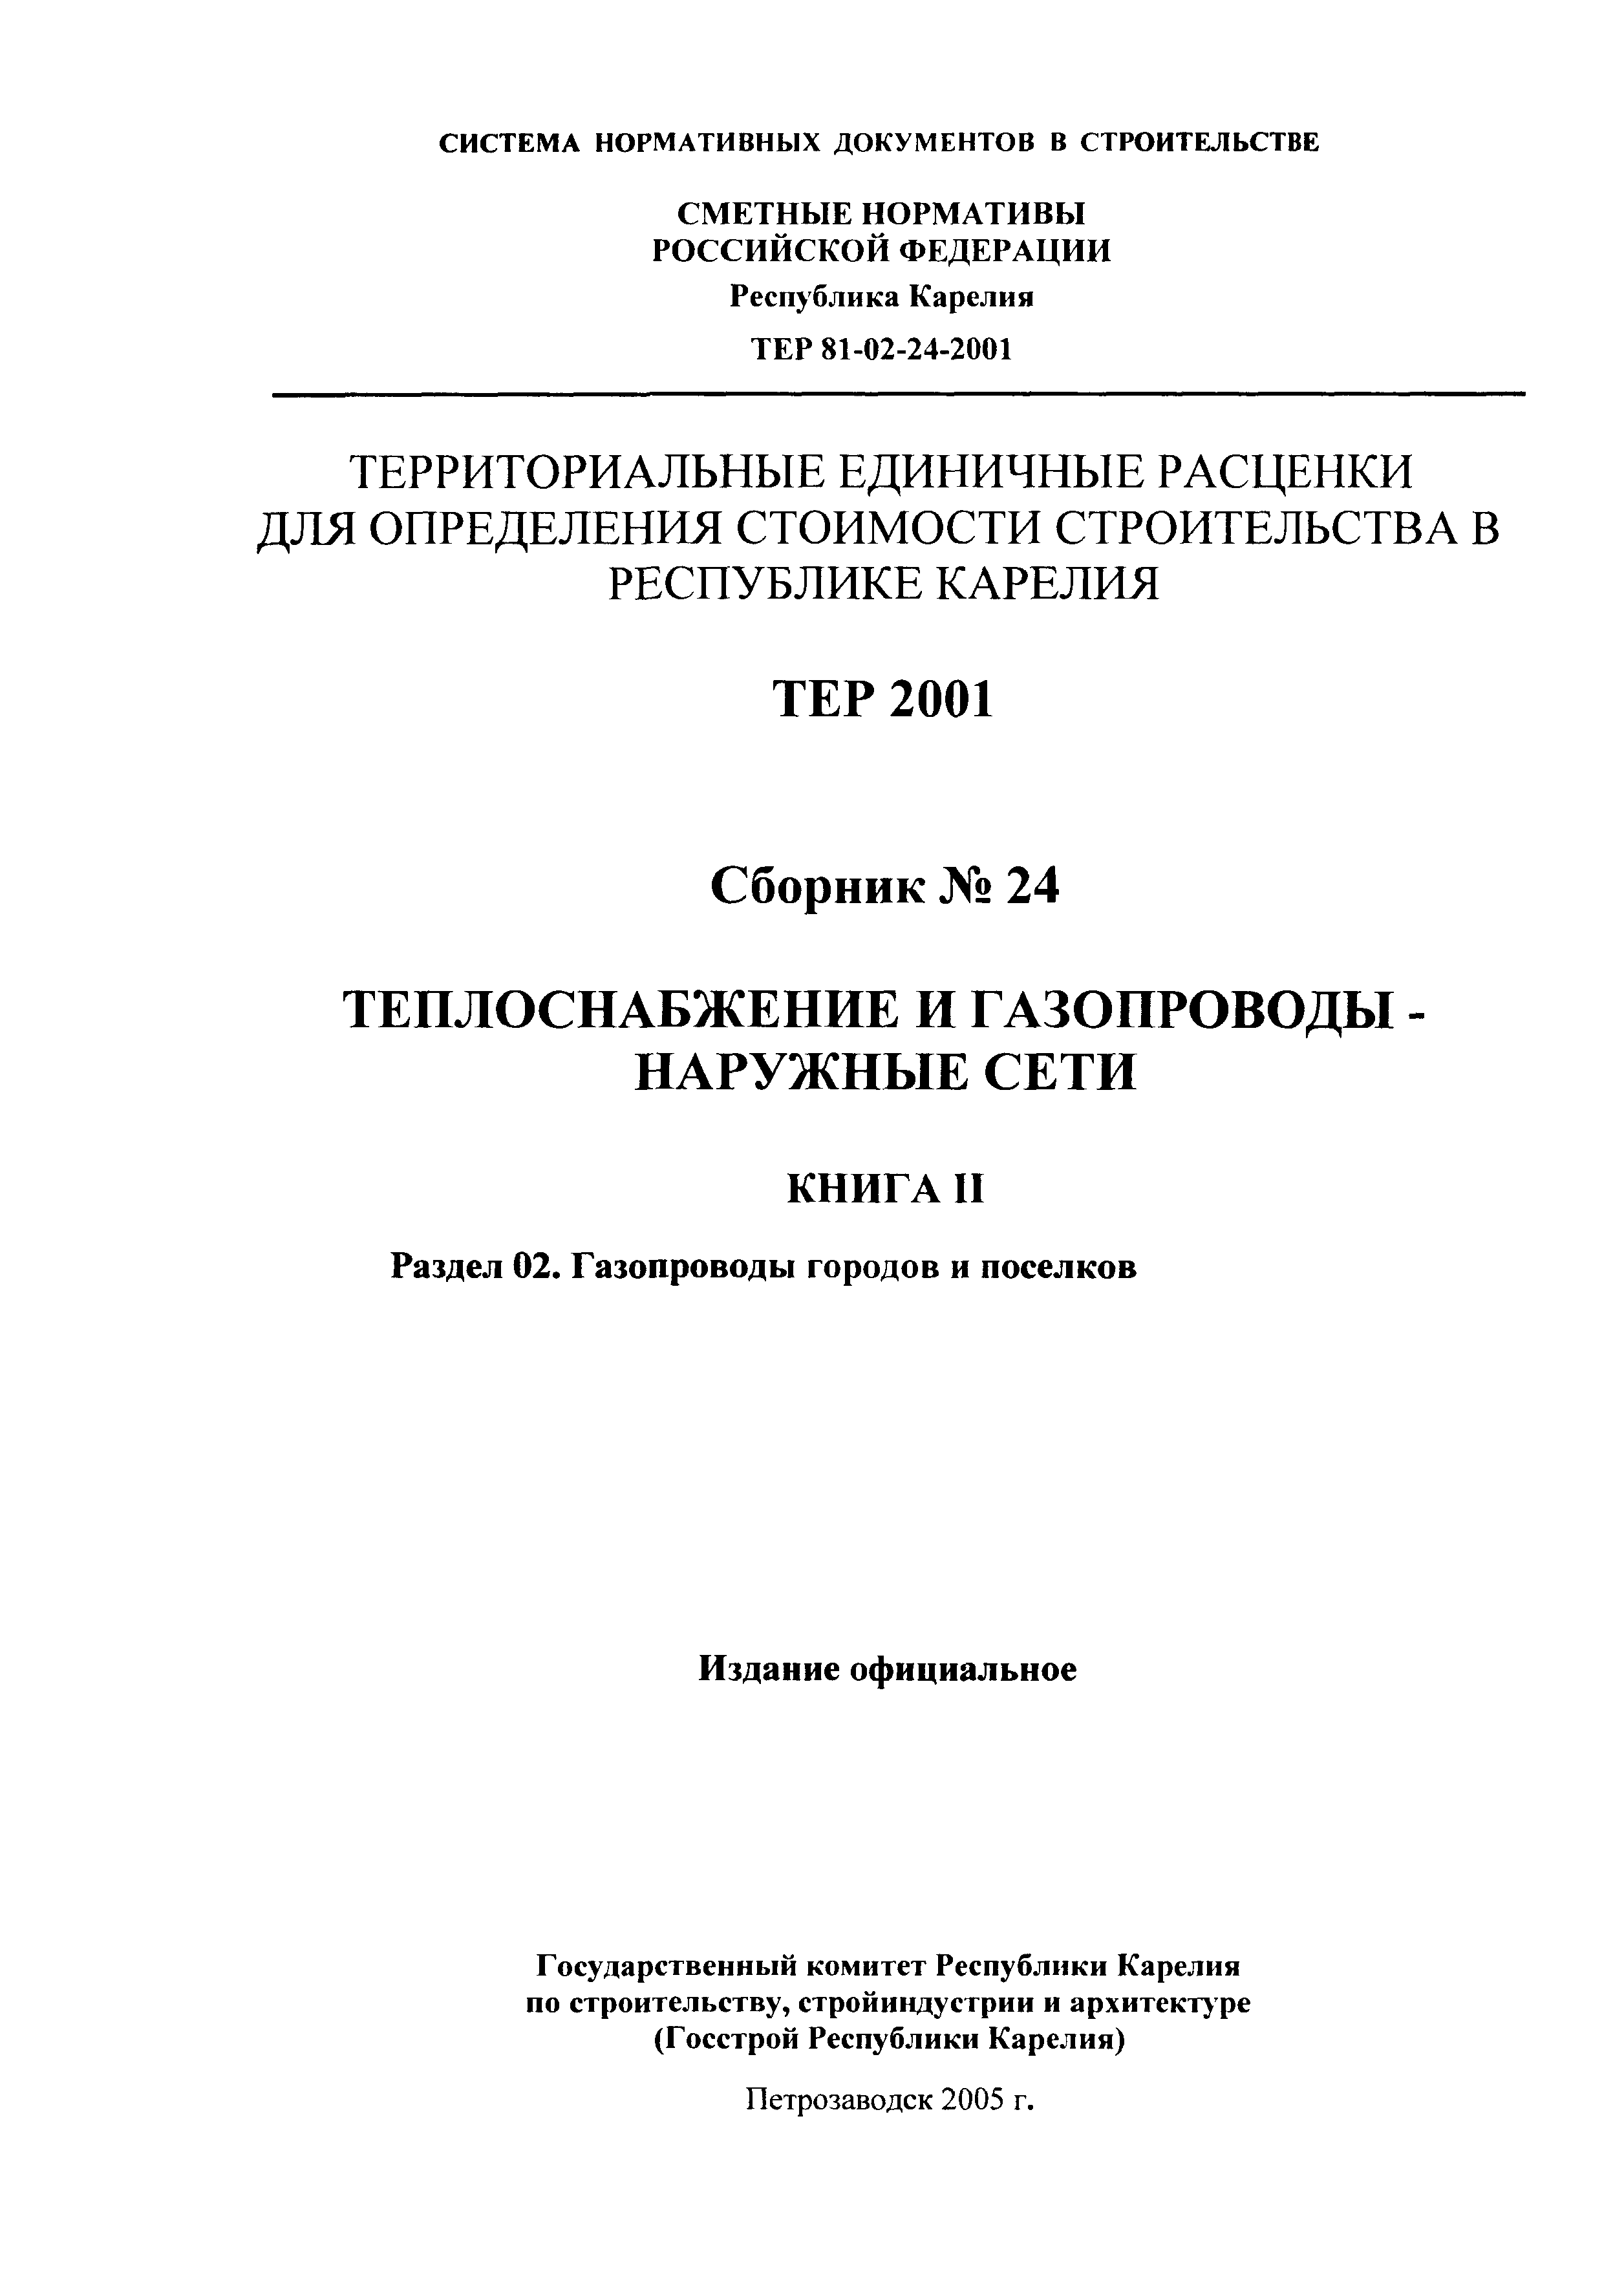 ТЕР Республика Карелия 2001-24